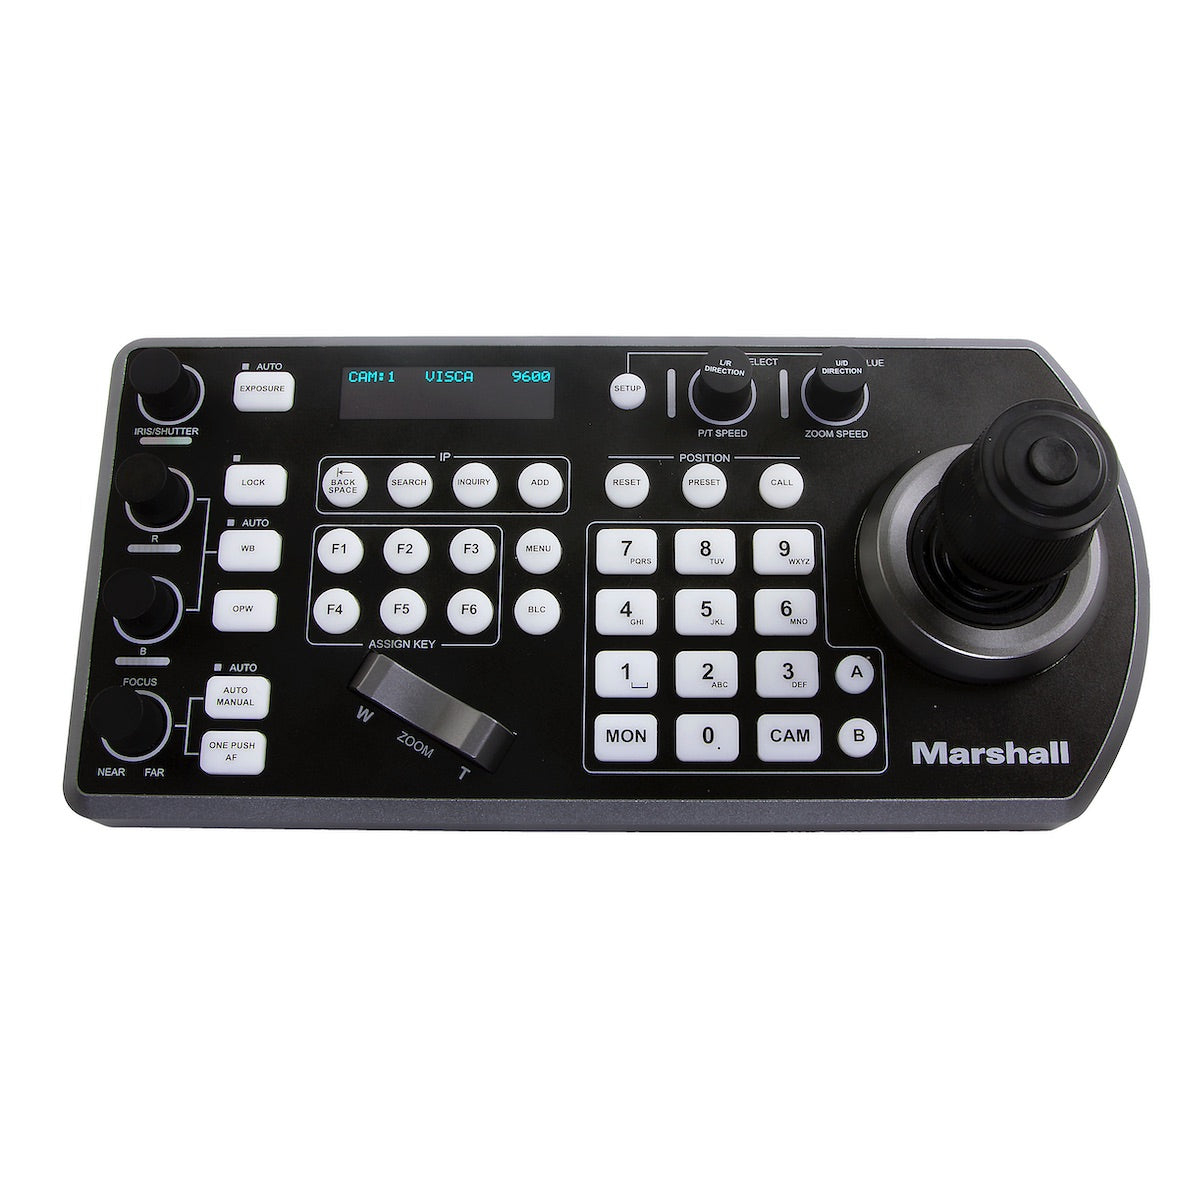 Marshall VS-PTC-IP - IP PTZ Camera Controller, top